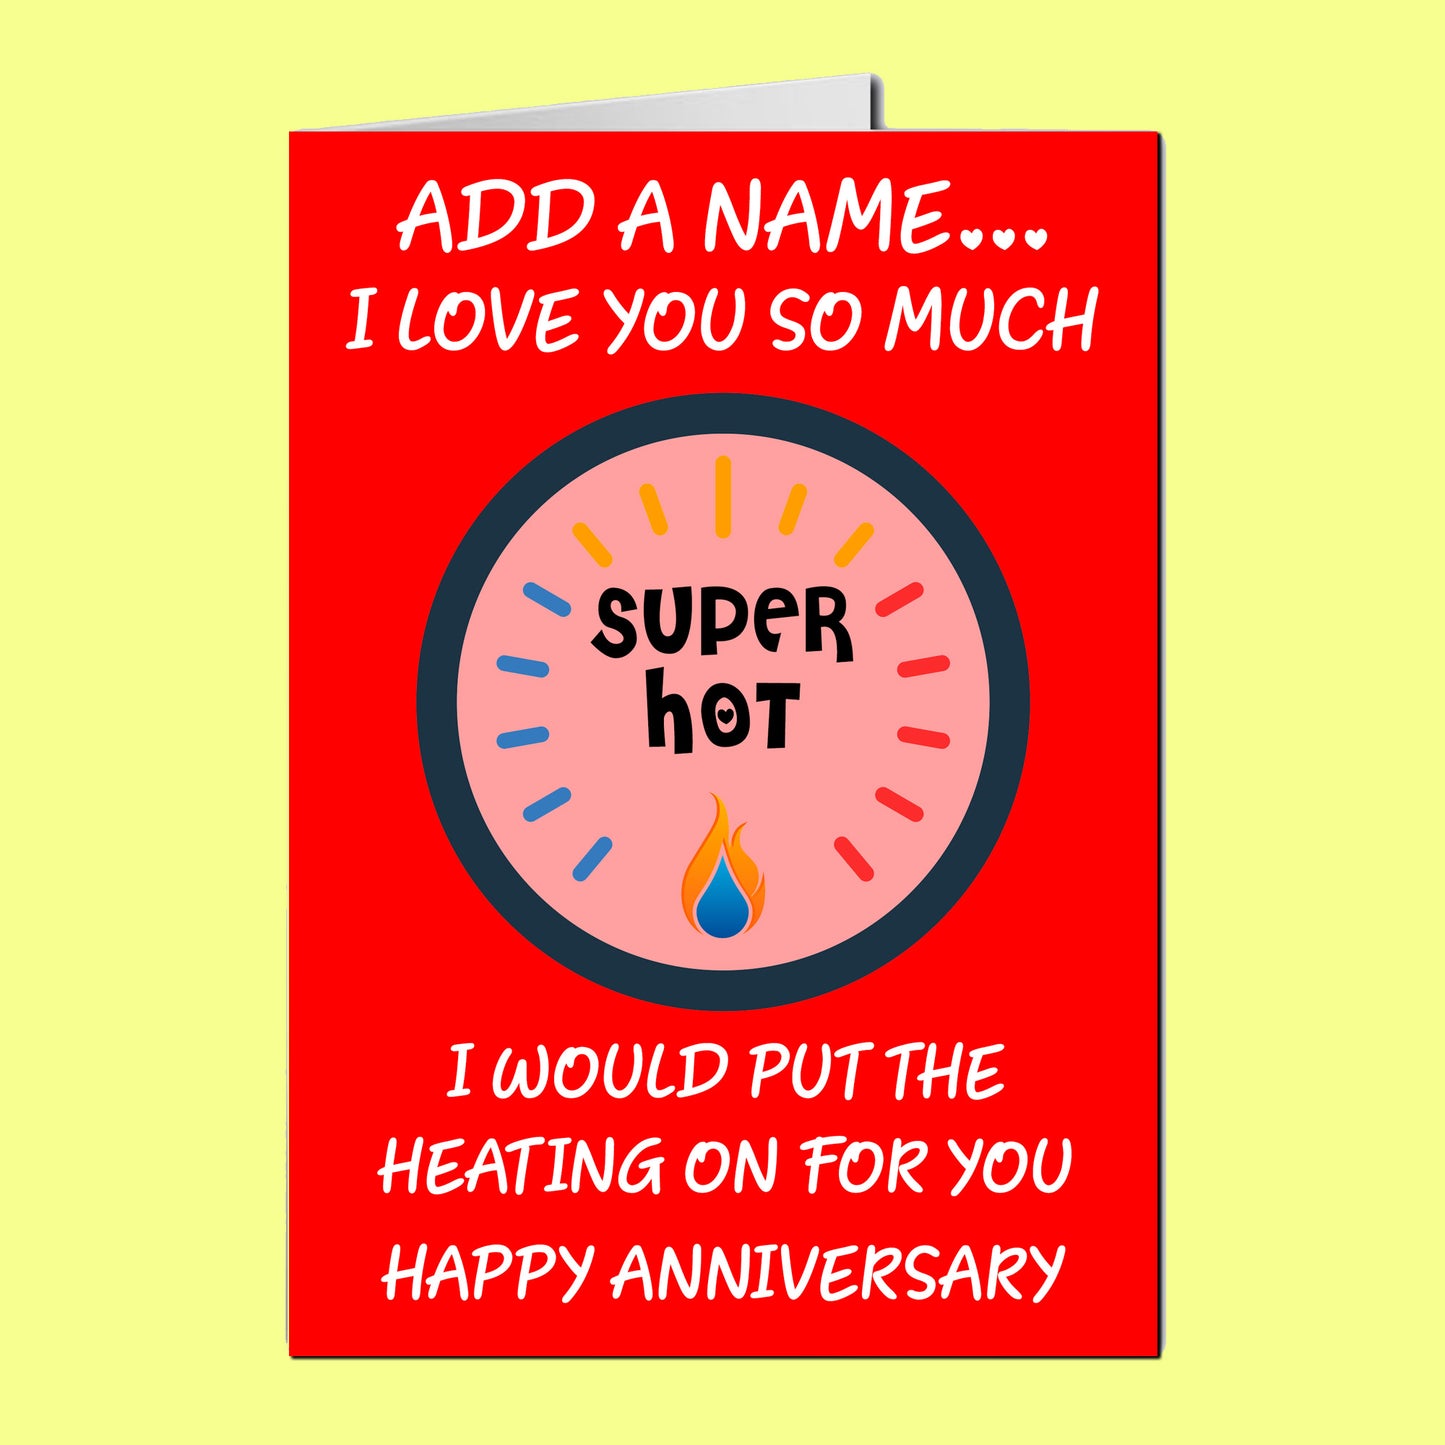 Super Hot Anniversary Cards